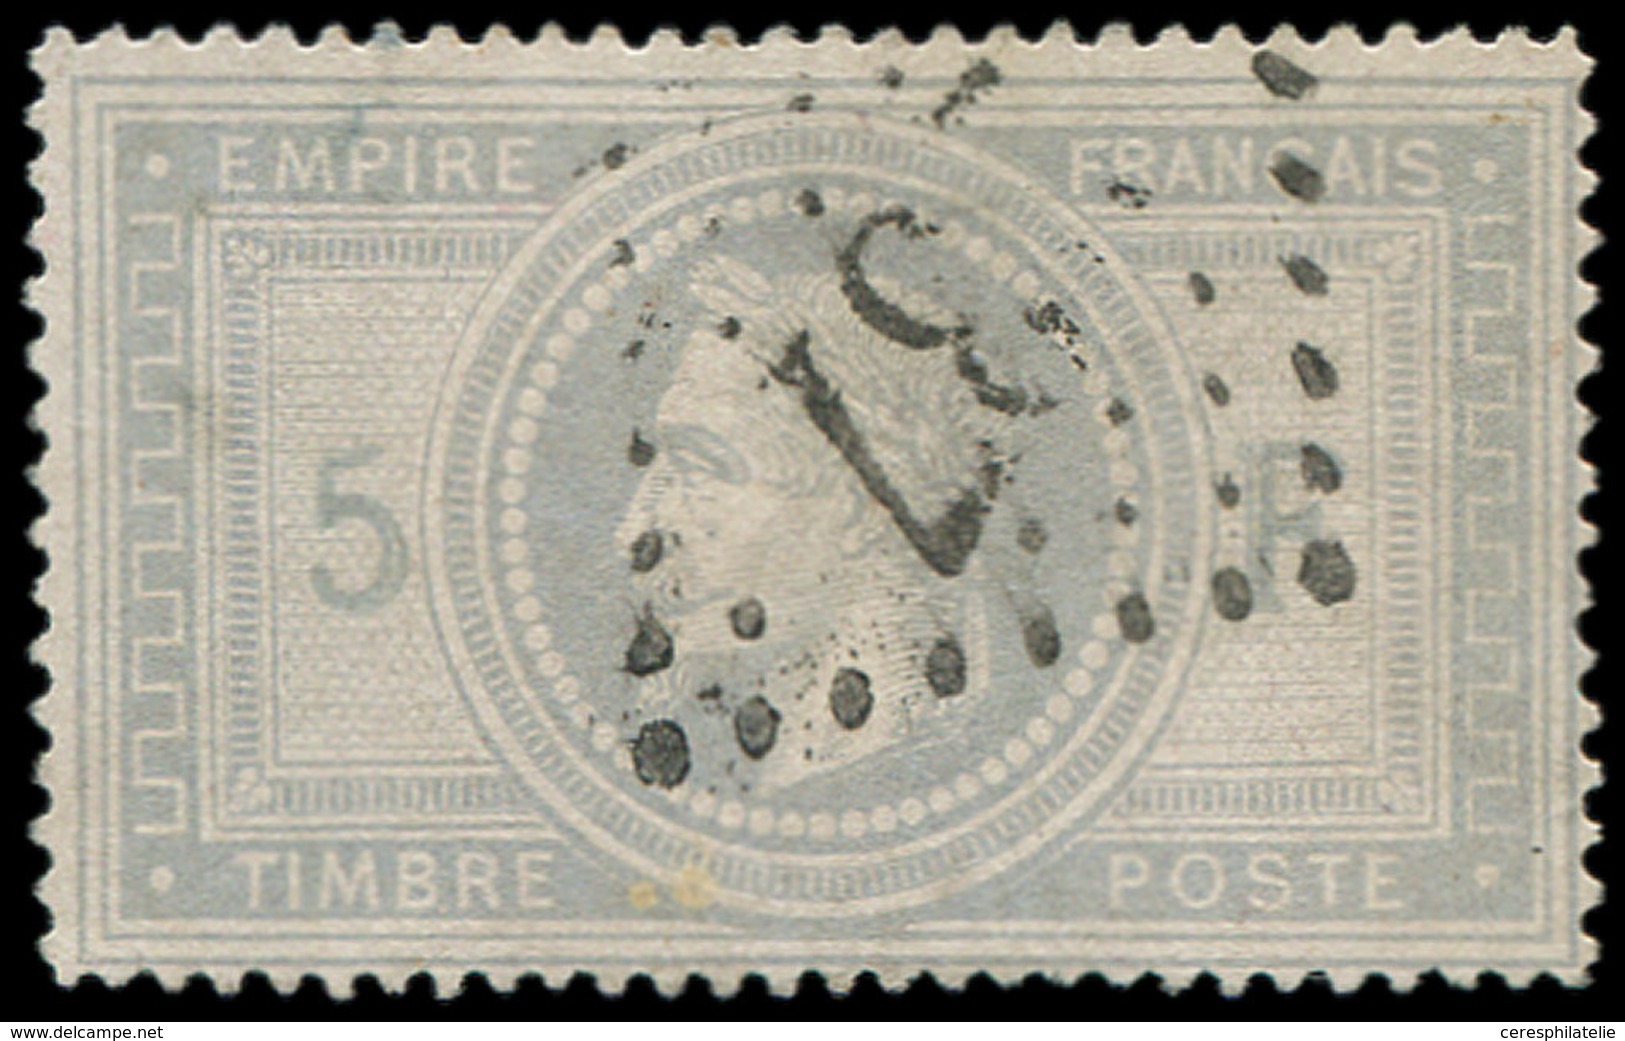 EMPIRE LAURE - 33    5f. Violet-gris, Obl. GC 237, Clairs, Aspect TB. C - 1863-1870 Napoleon III With Laurels